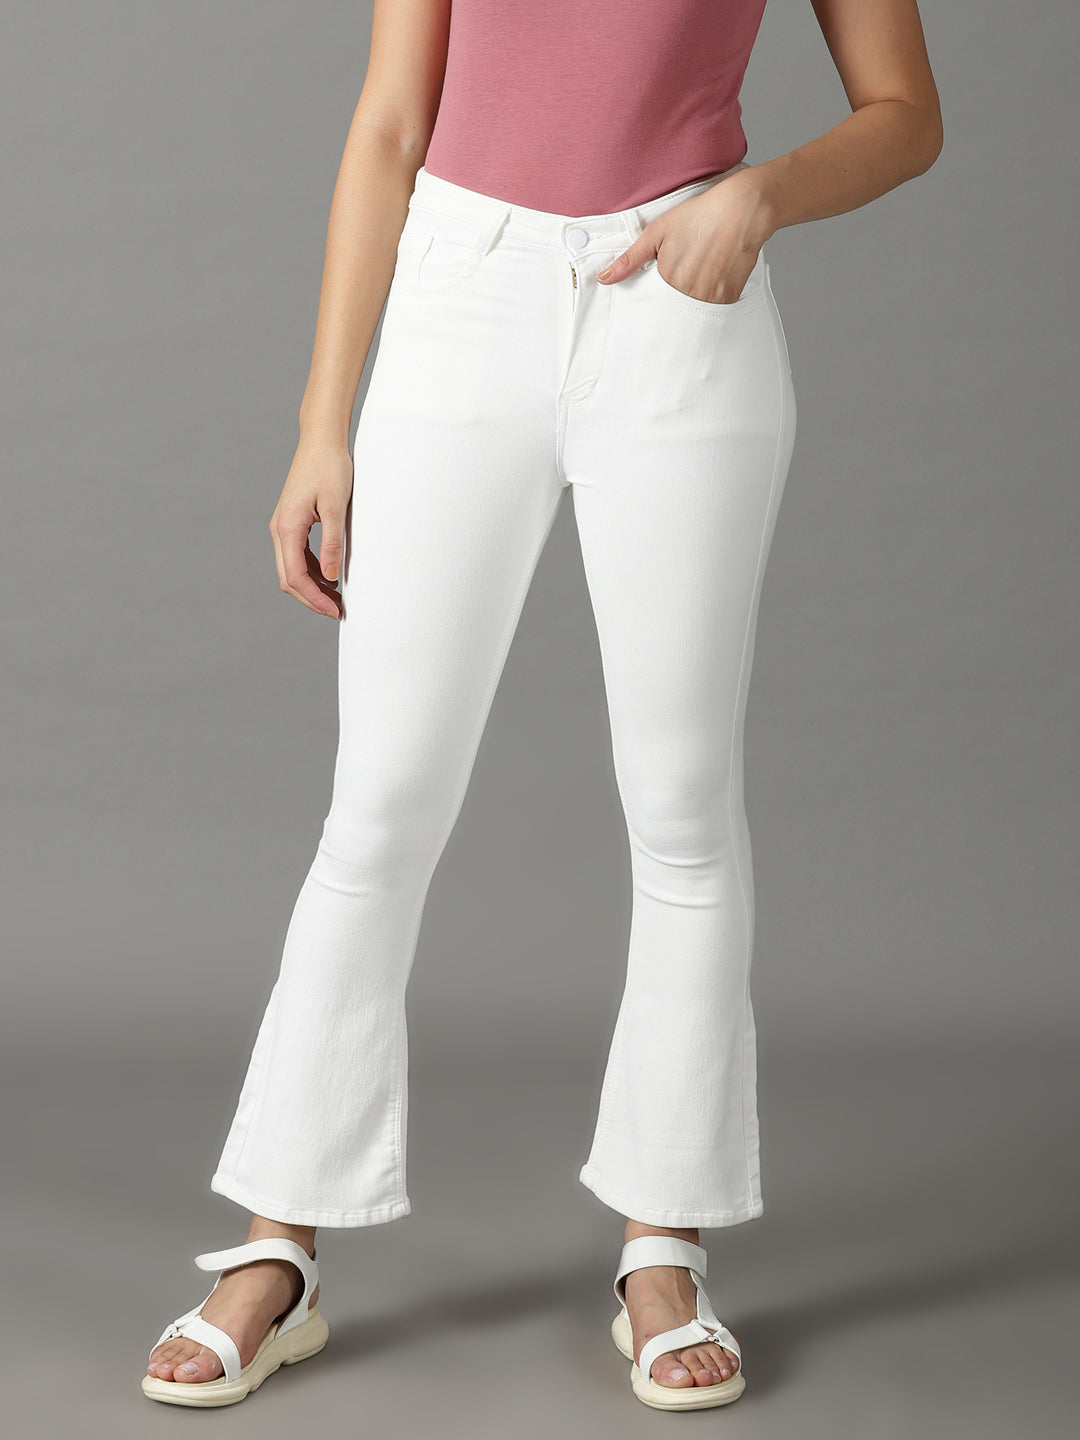 Women's White Solid Bootcut Denim Jeans